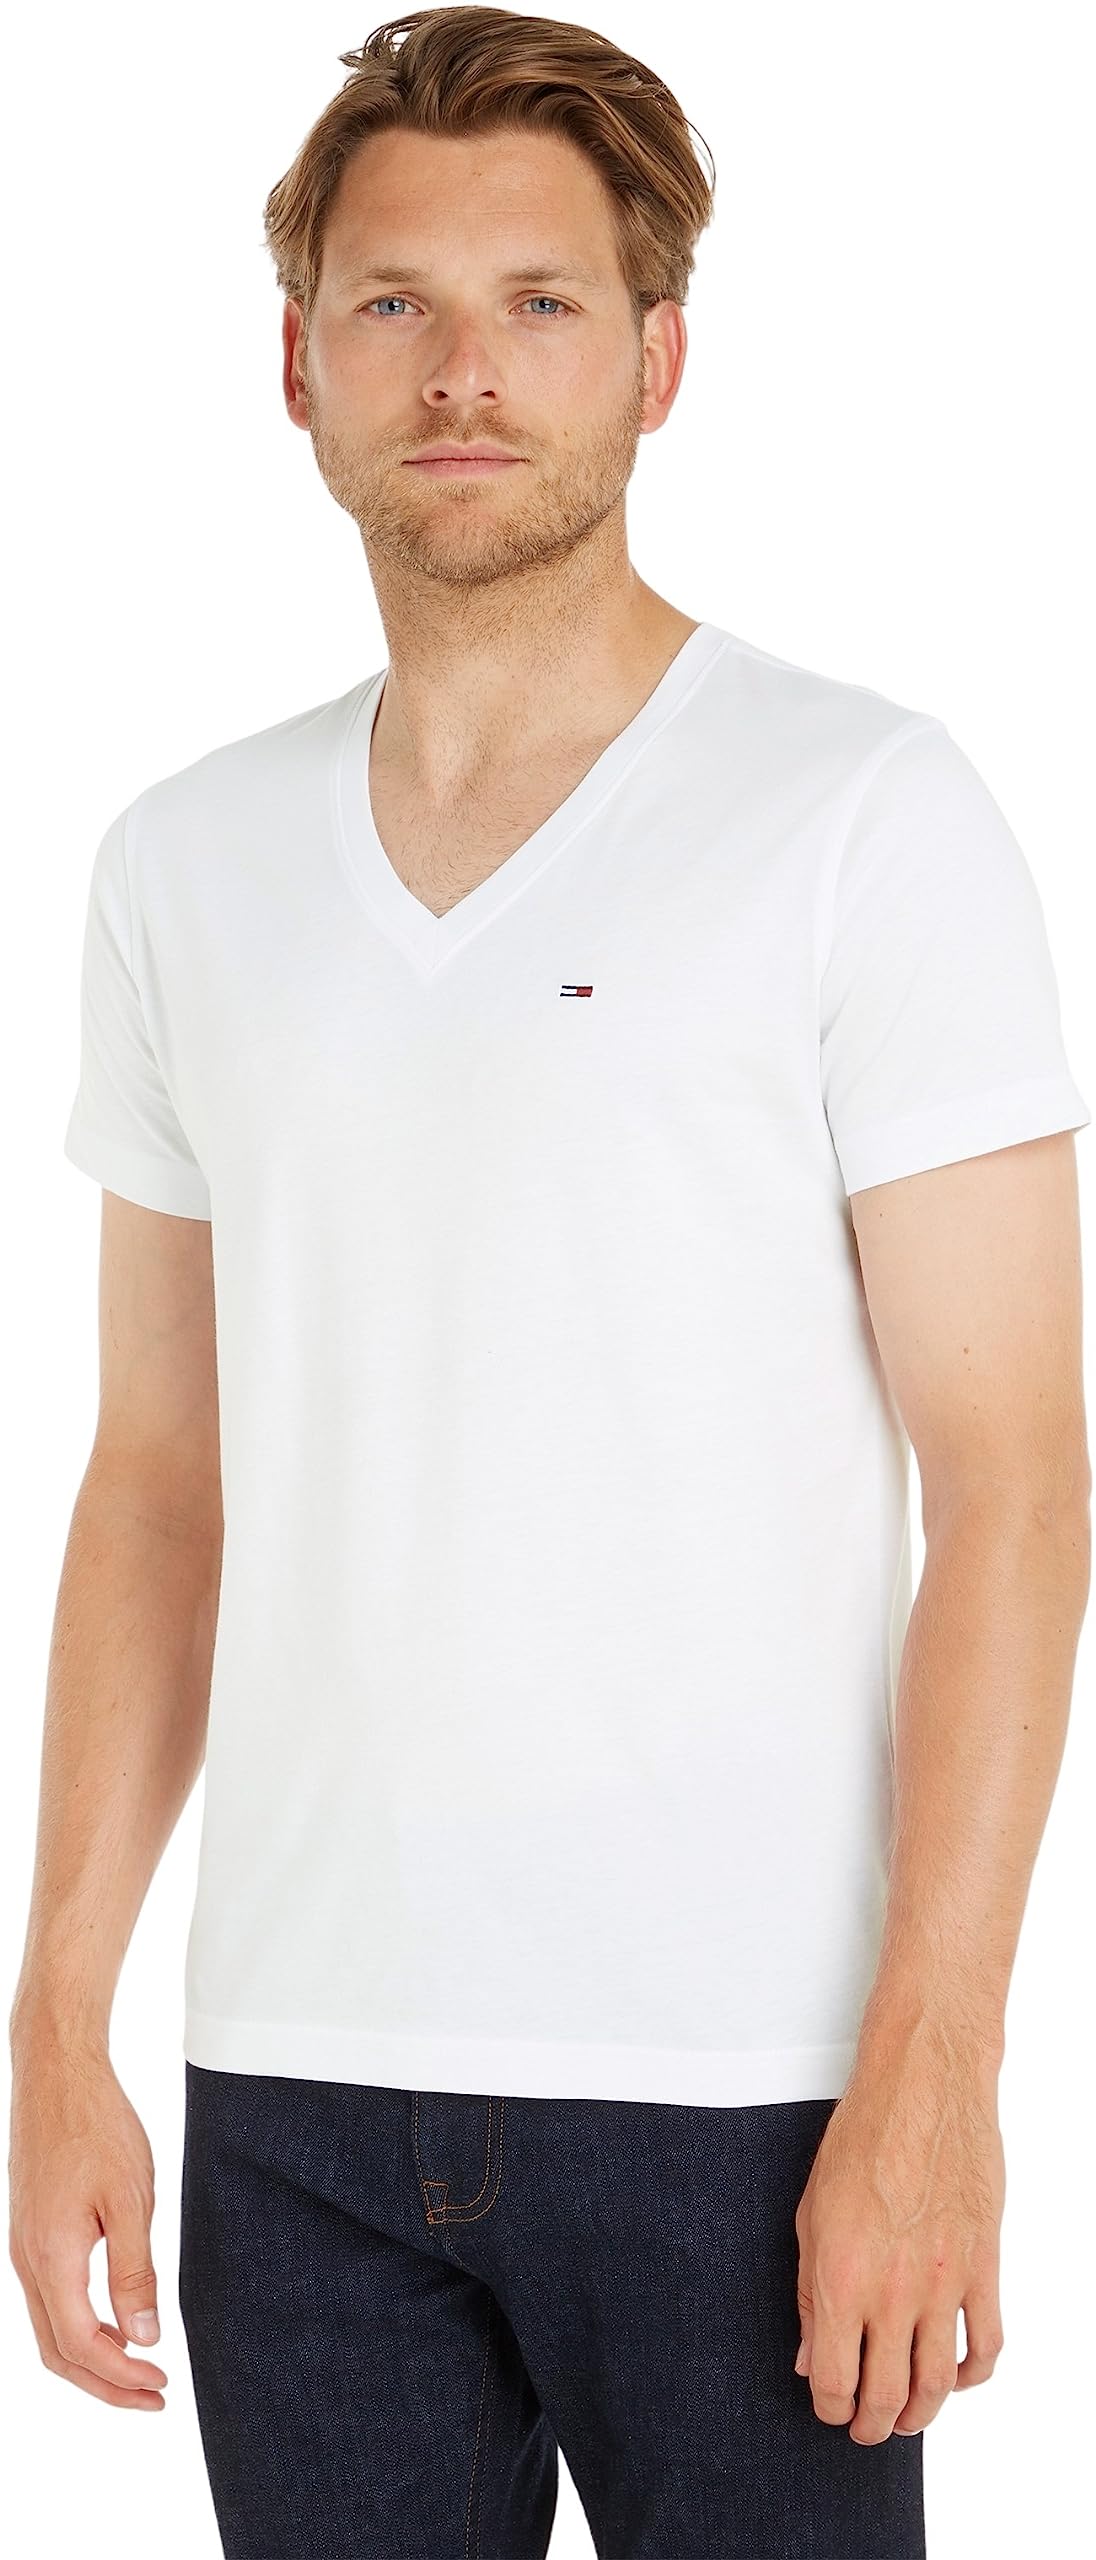 Tommy Hilfiger T-Shirt Herren Kurzarm TJM Original V-Ausschnitt, Weiß (Classic White), M